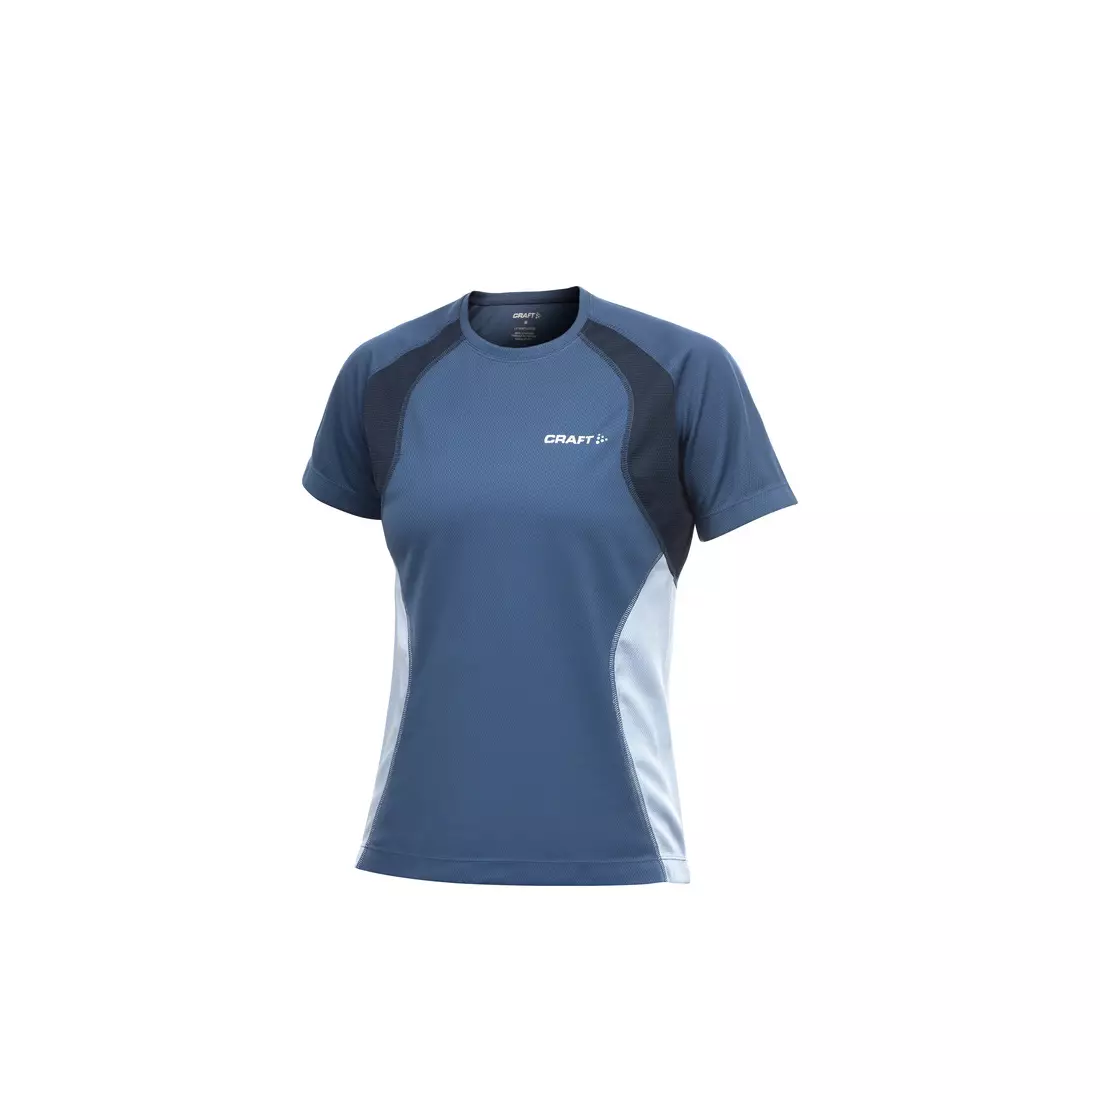 CRAFT ACTIVE mesh women's running T-shirt 1900766-2940